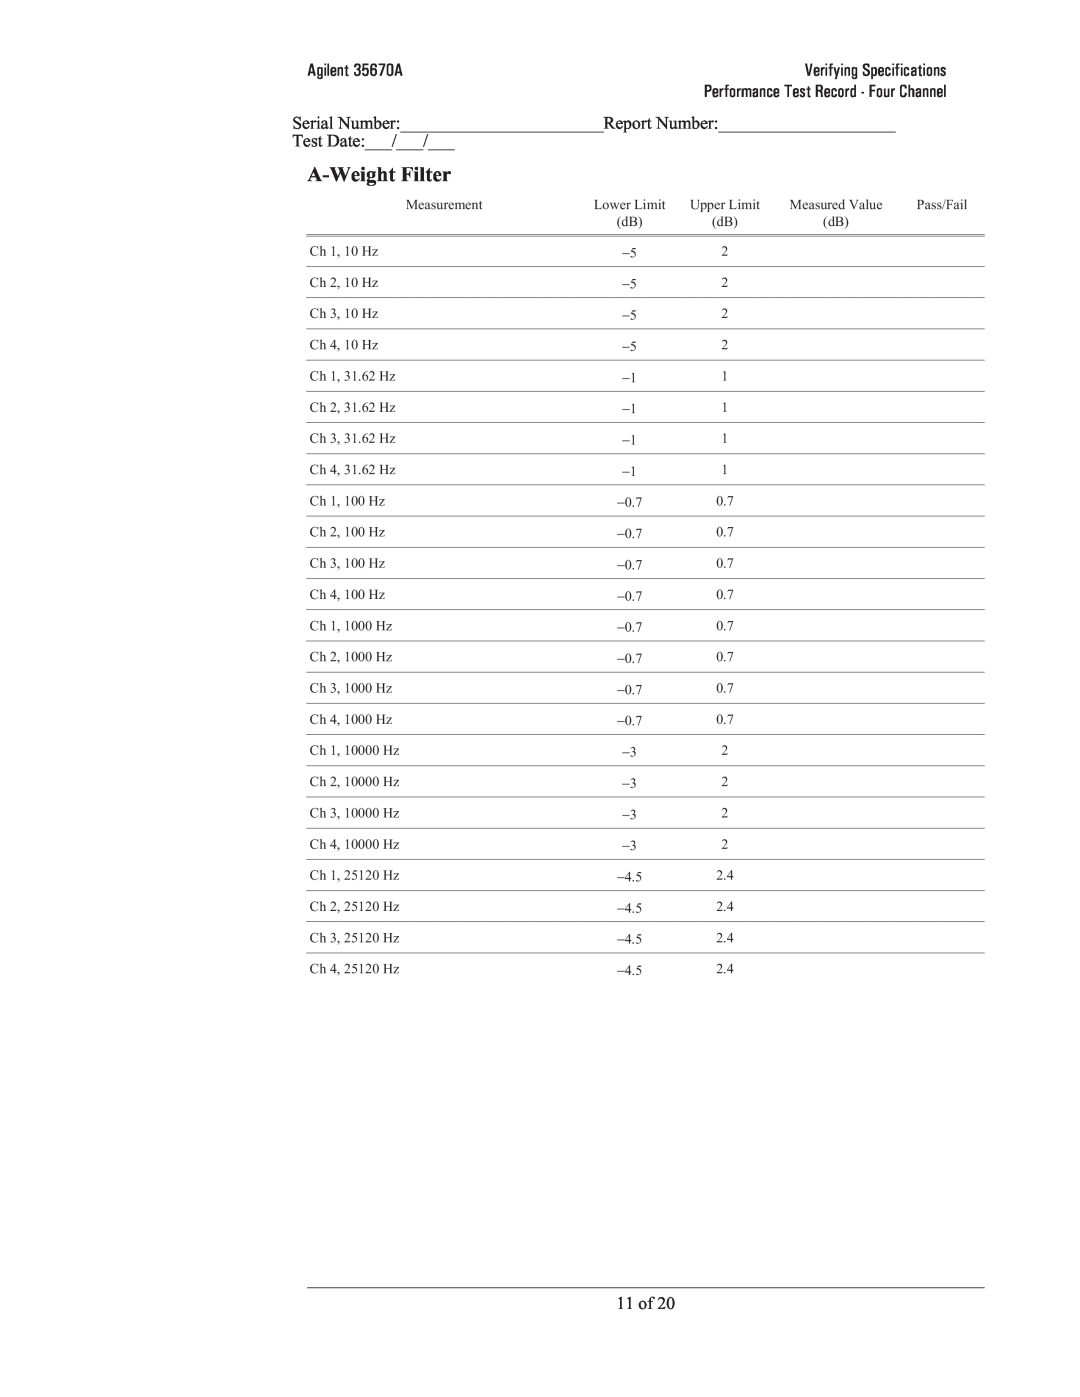 Agilent Technologies 35670-90066 manual A-WeightFilter, Agilent 35670A, Verifying Specifications, Measurement 